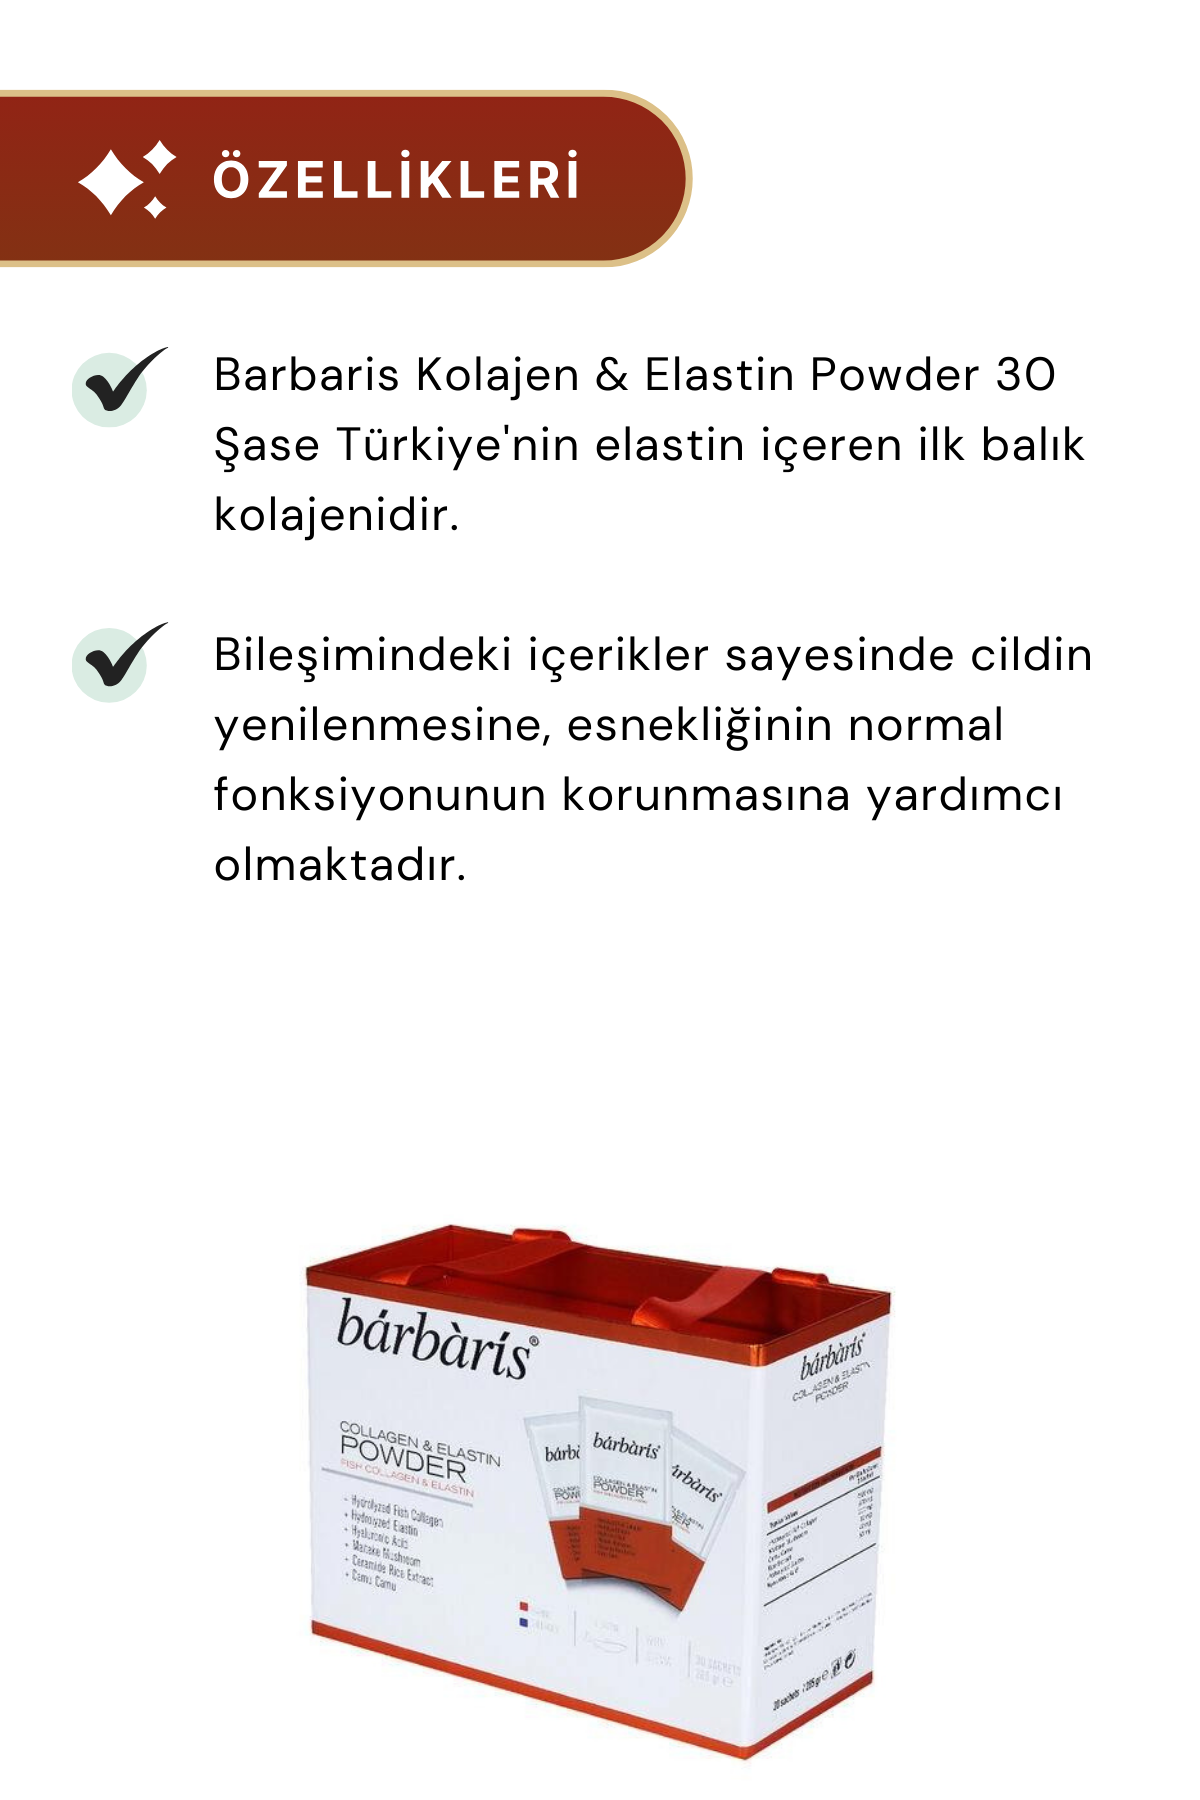 Barbaris Kolajen & Elastin Powder 30 Şase 3'lü Paket